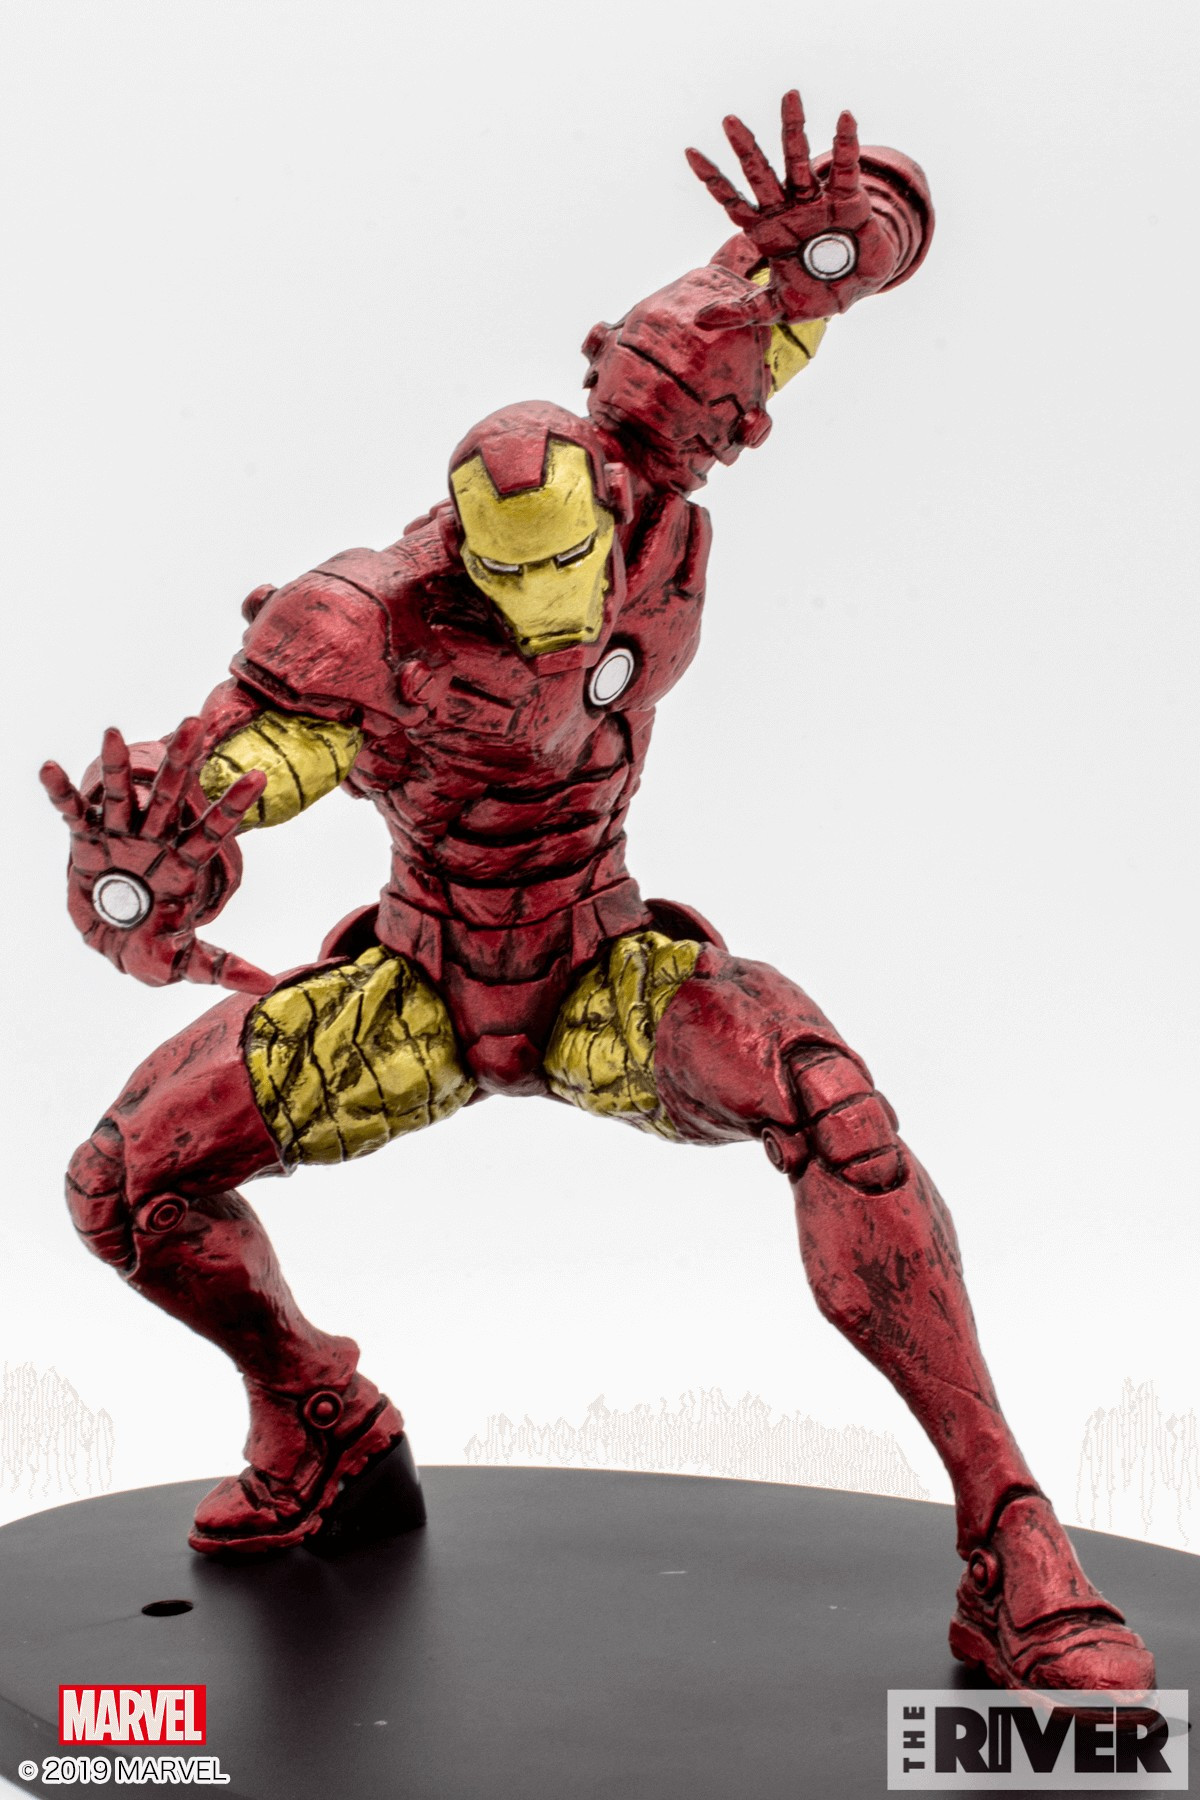 Iron-Man - Figurine Iron...